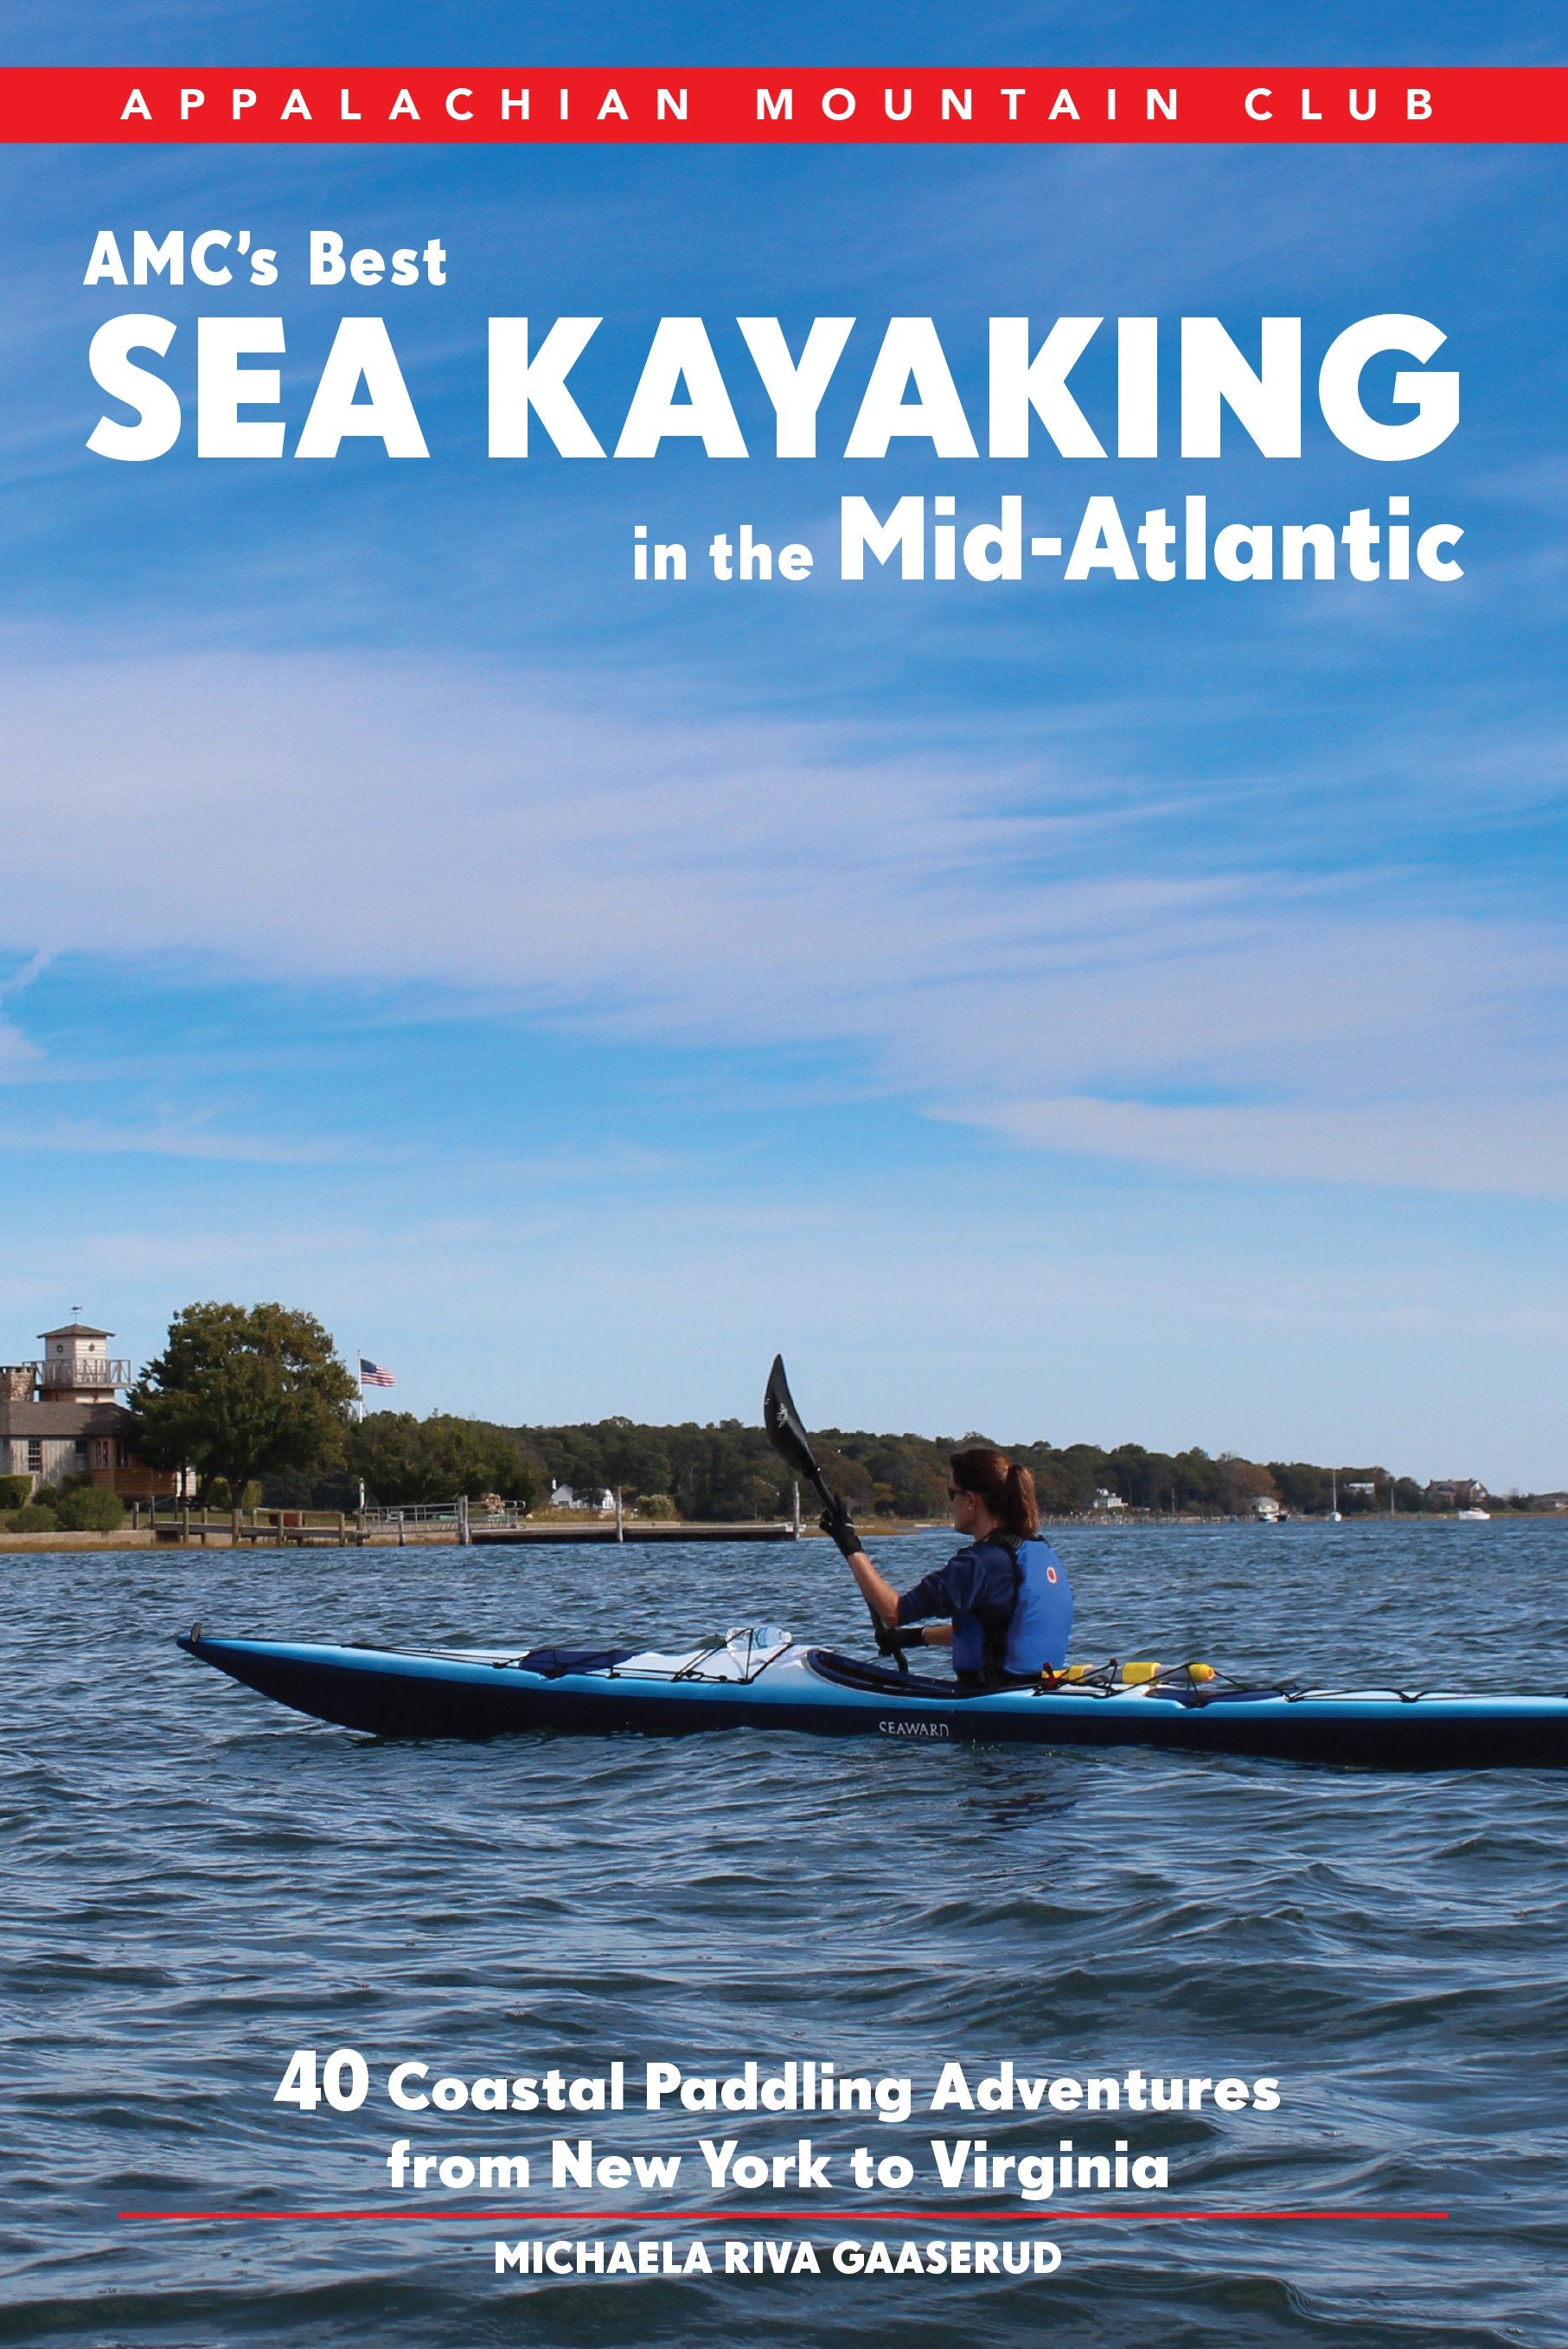 AMC's Best Sea Kayaking in the Mid-Atlantic